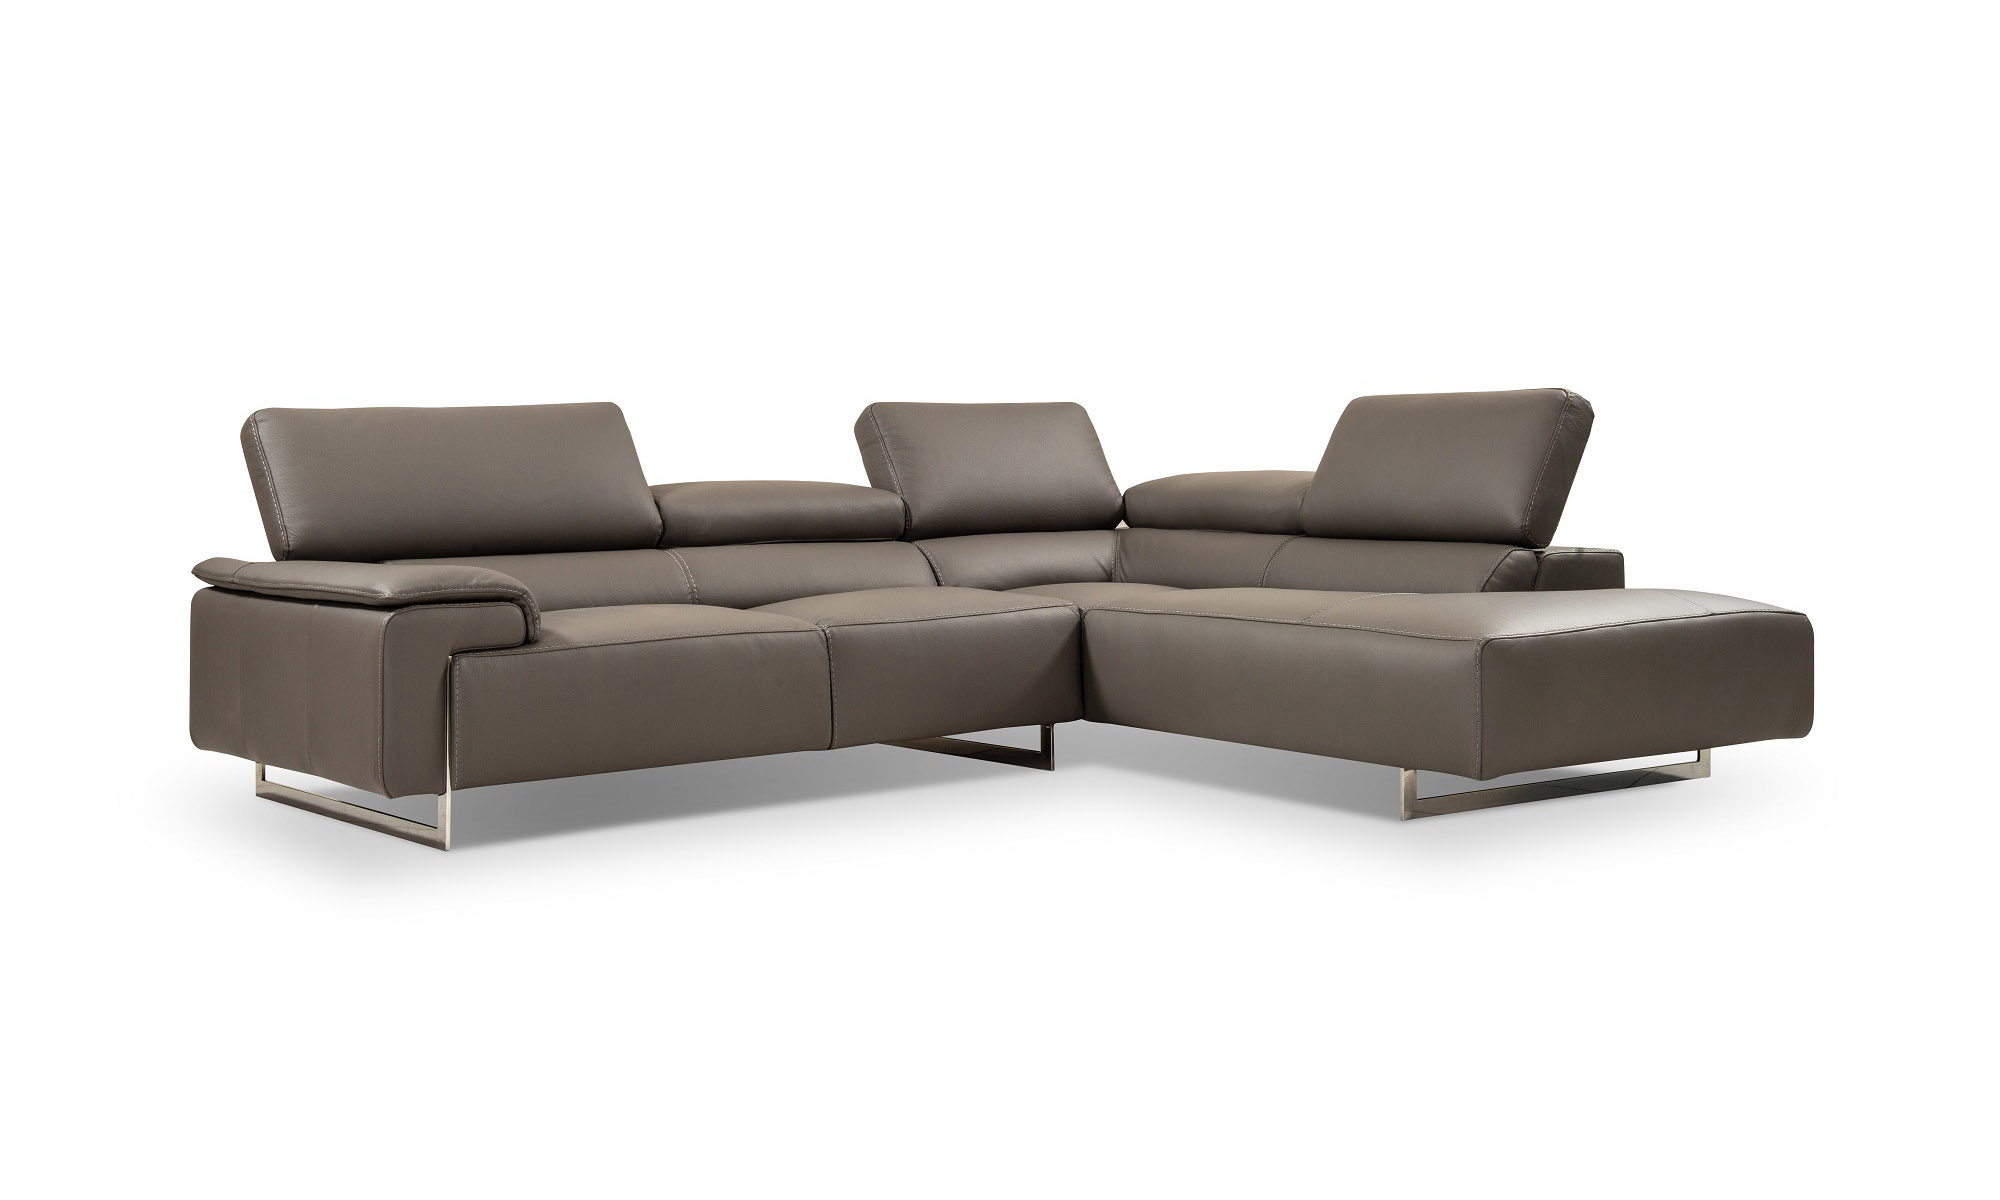 porsche italian leather sectional sofa